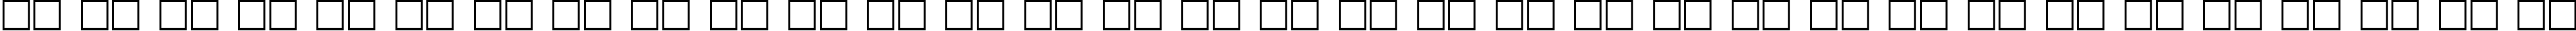 Пример написания русского алфавита шрифтом Bruskovaya Comp Plain105n